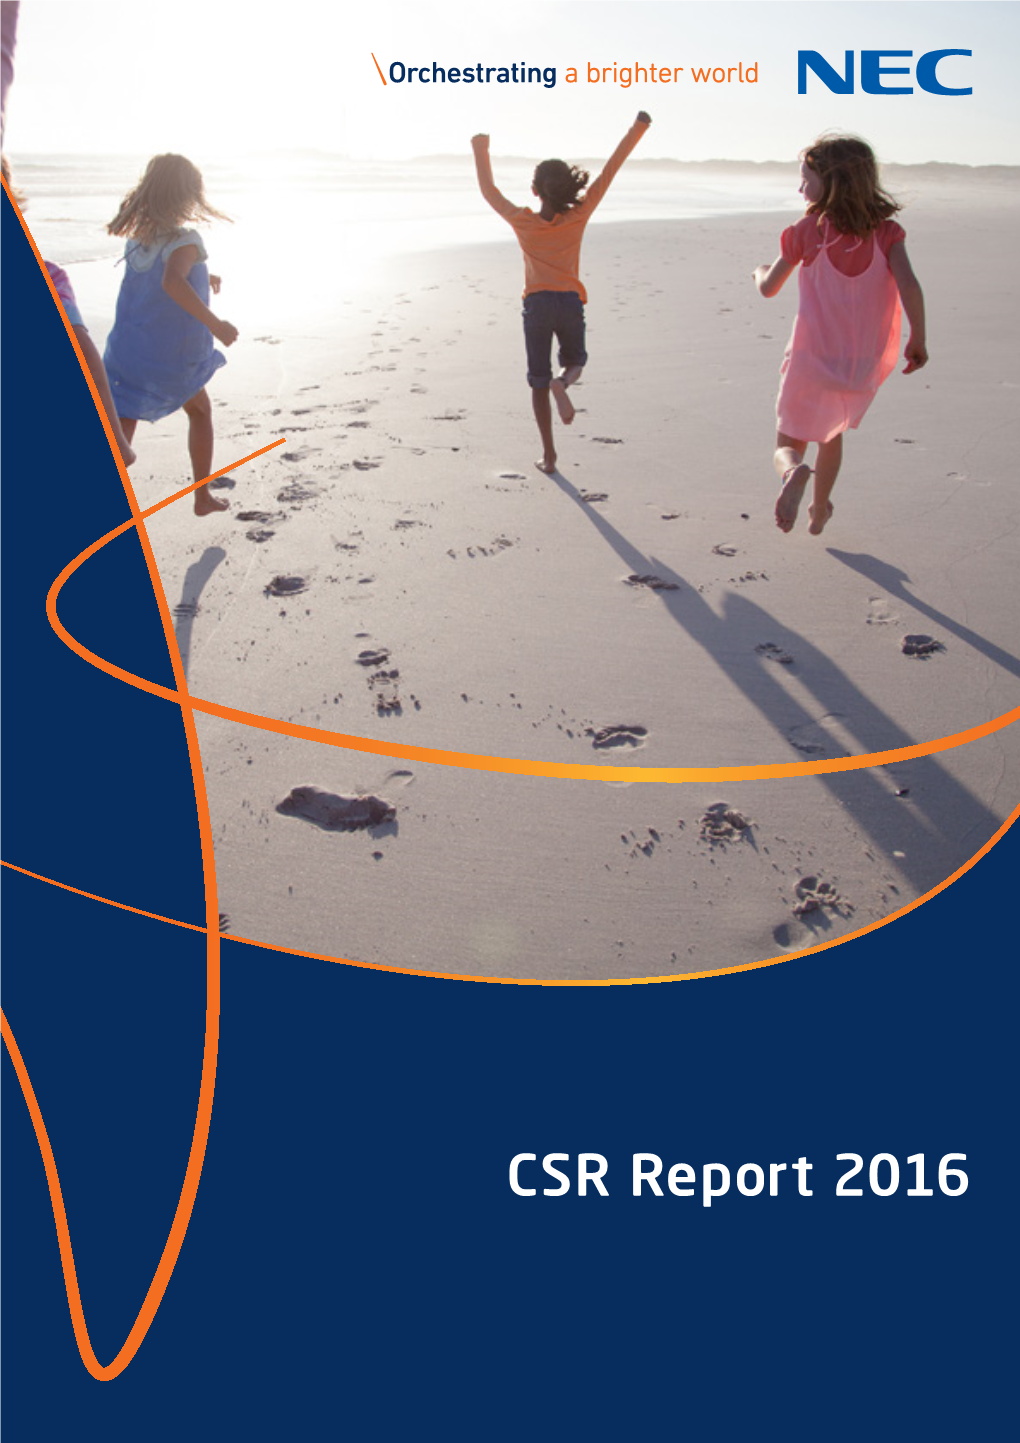 CSR Report 2016